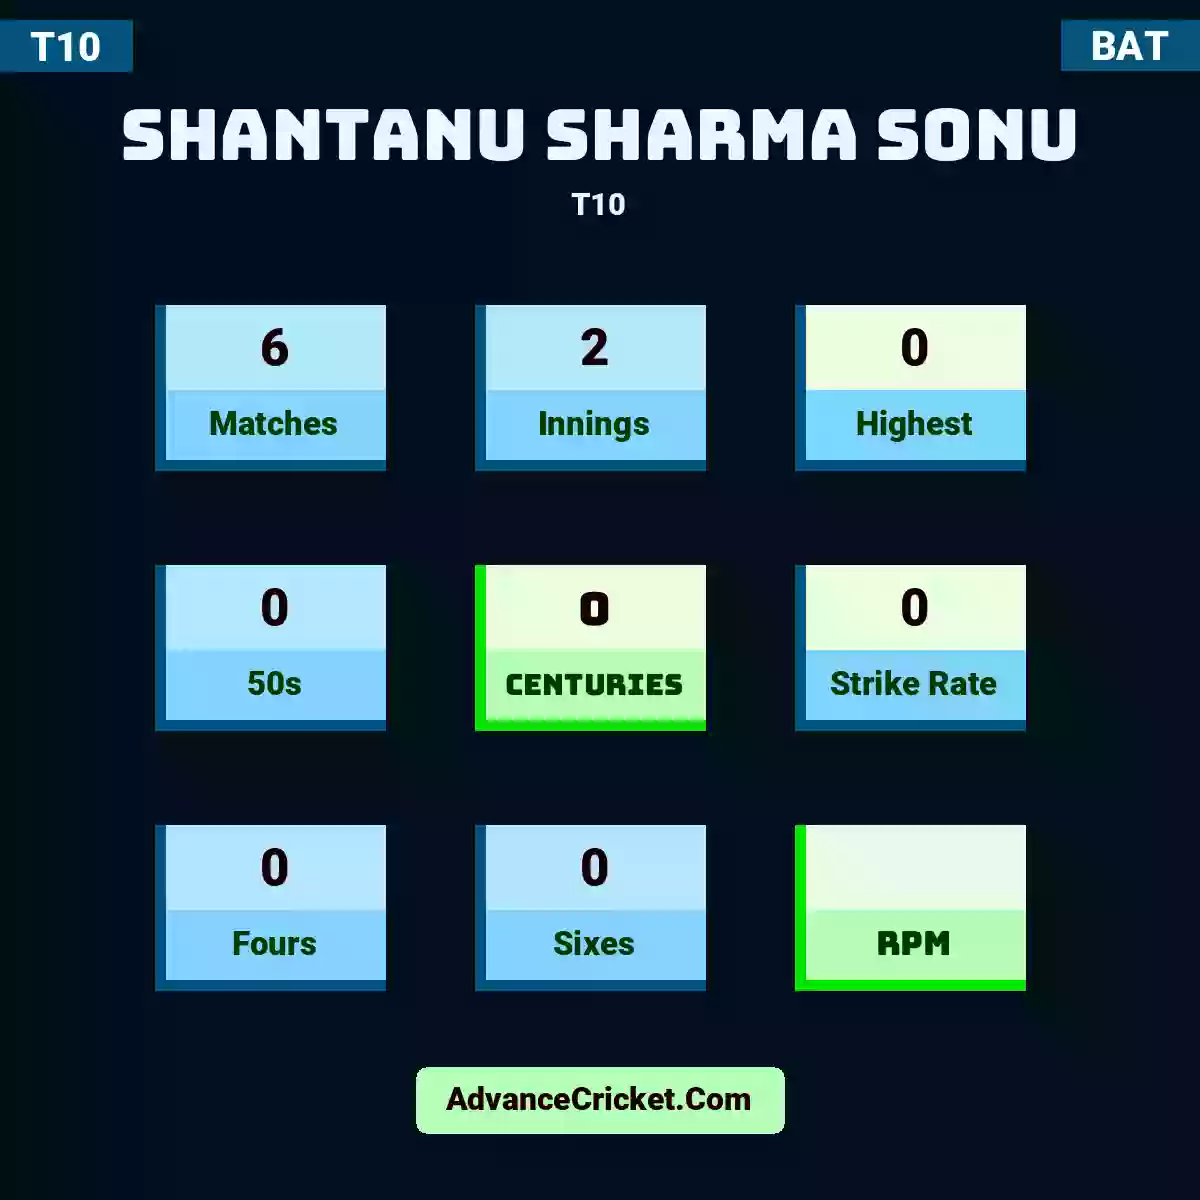 Shantanu Sharma Sonu T10 , Shantanu Sharma Sonu played 6 matches, scored 0 runs as highest, 0 half-centuries, and 0 centuries, with a strike rate of 0. S.Sharma Sonu hit 0 fours and 0 sixes.